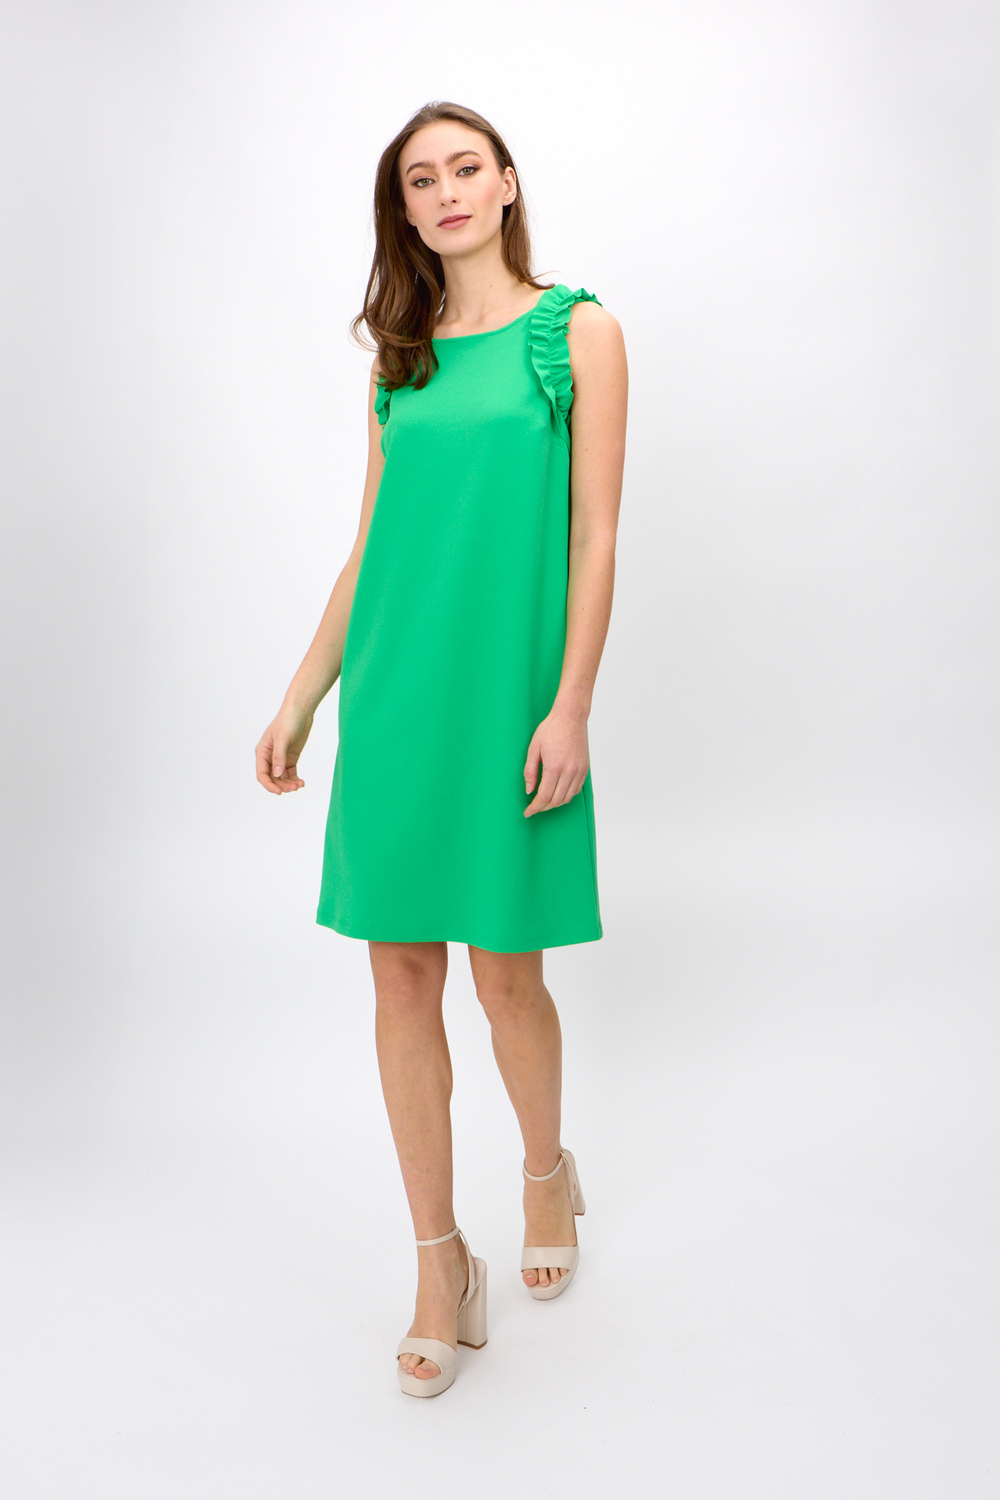 Ruffle Detail Shift Dress Style 242115. Island Green